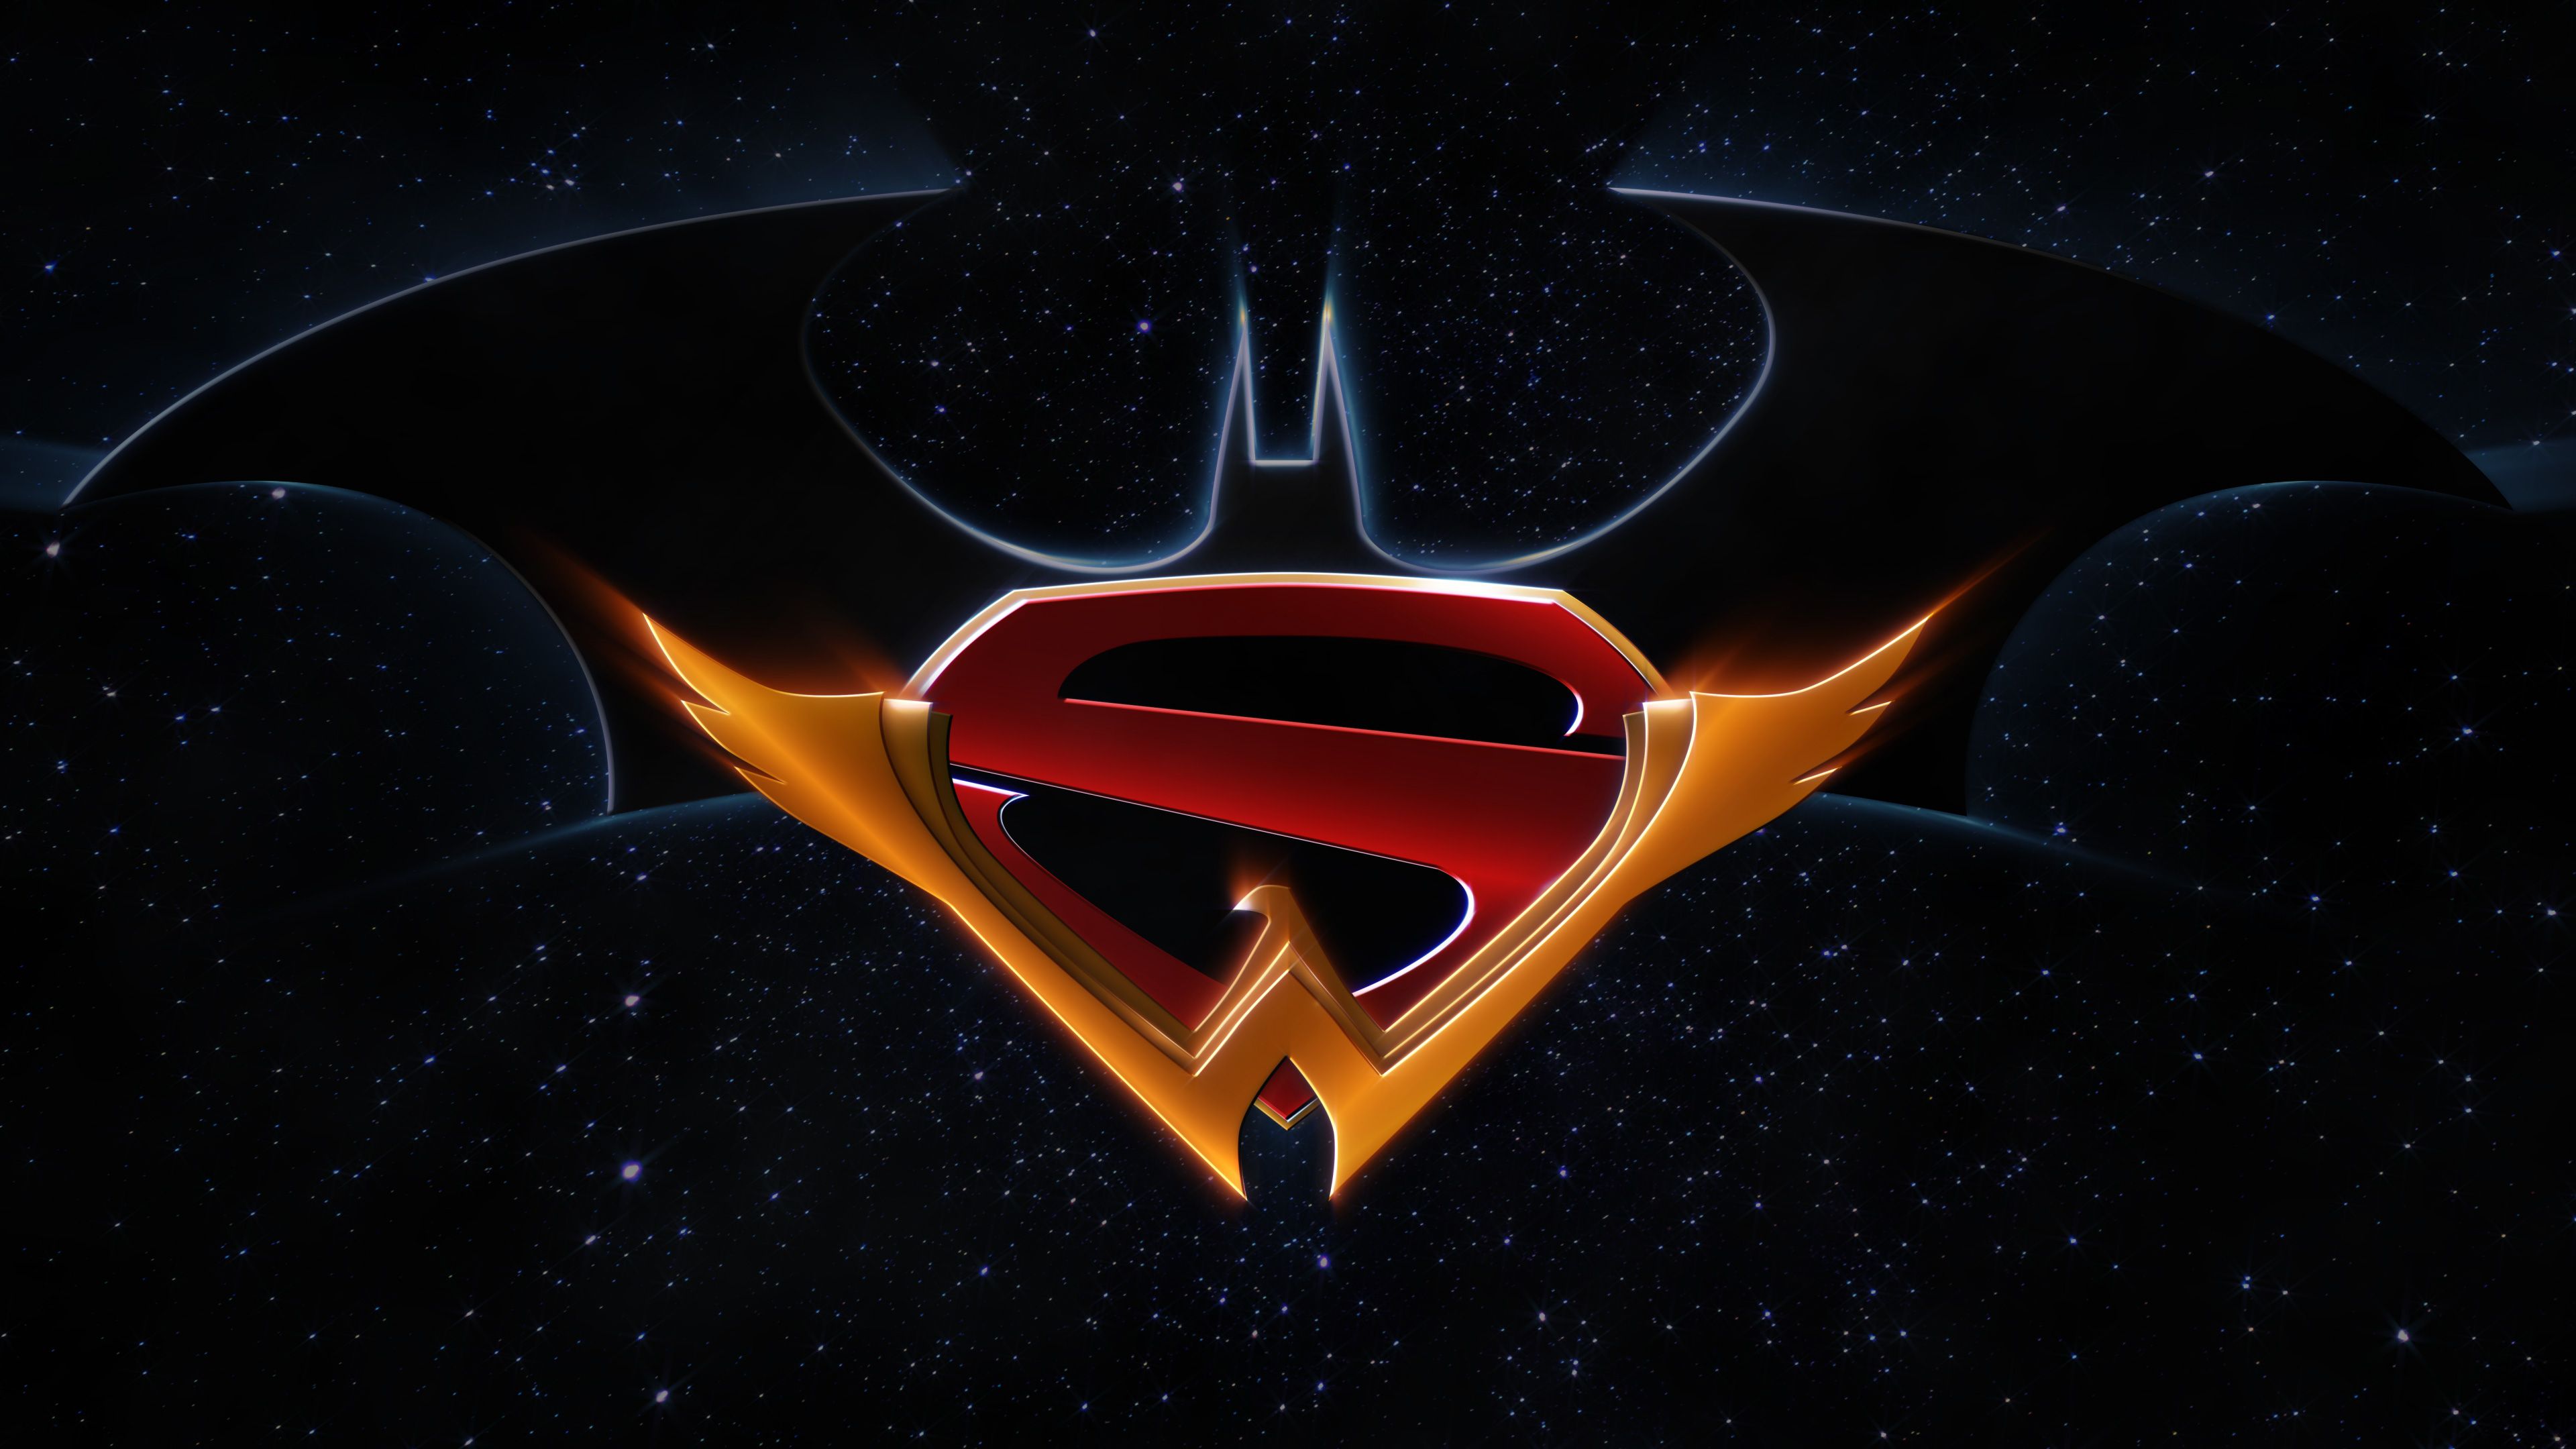 Batman Superman Wonder Woman Trinity Logo, HD Superheroes, 4k Wallpaper, Image, Background, Photo and Picture